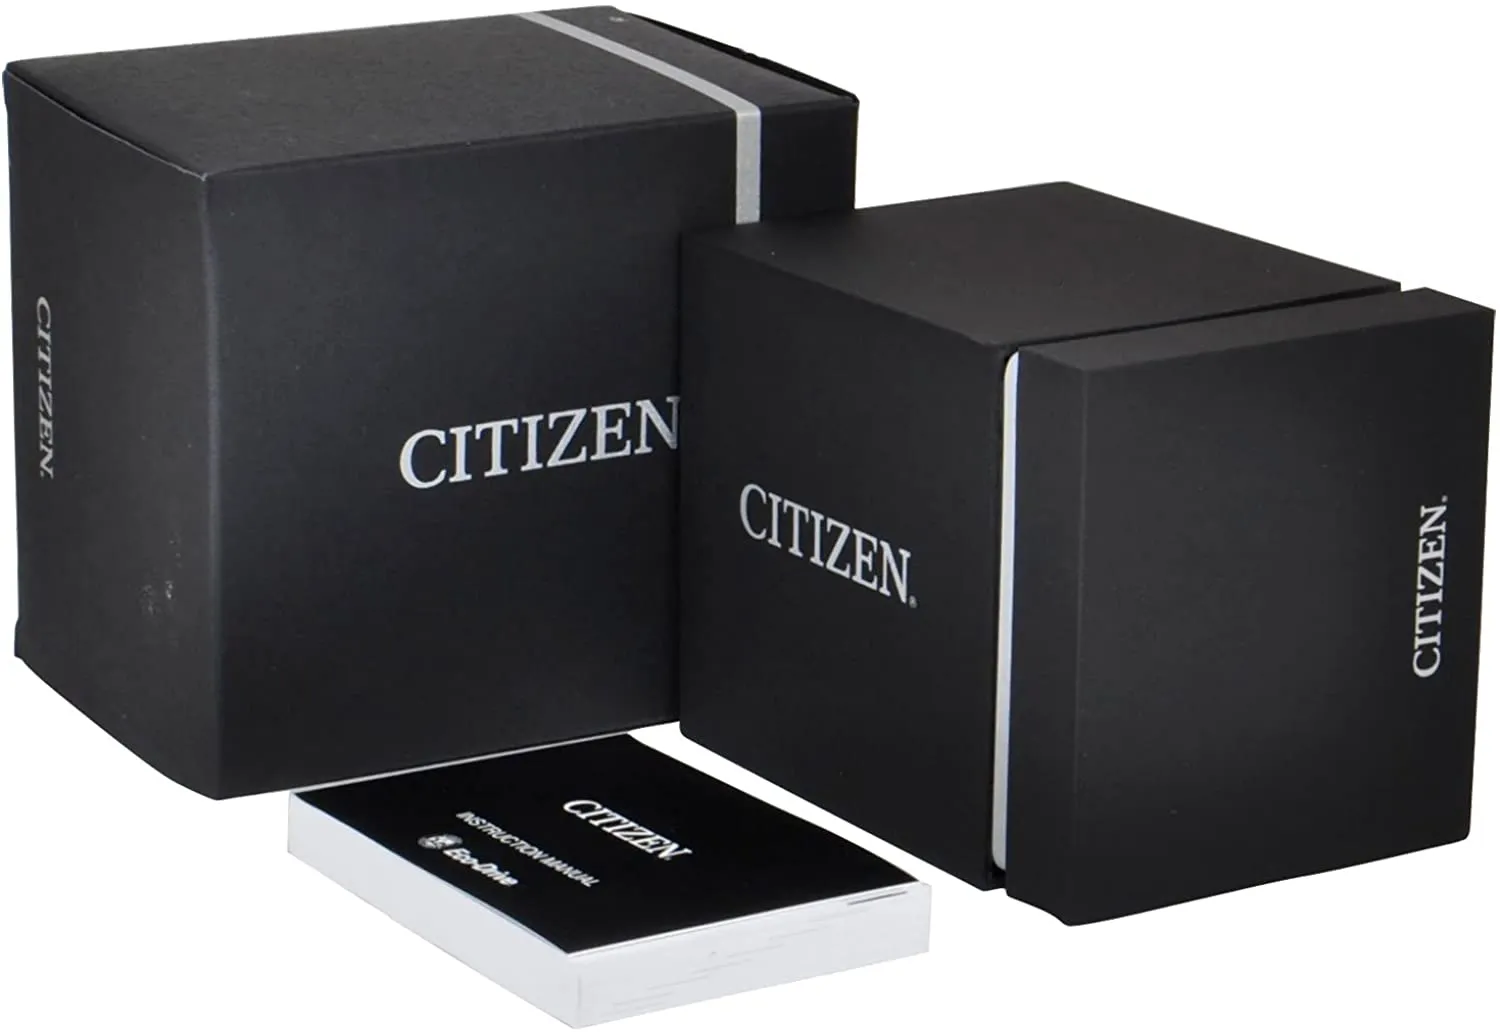 Citizen box